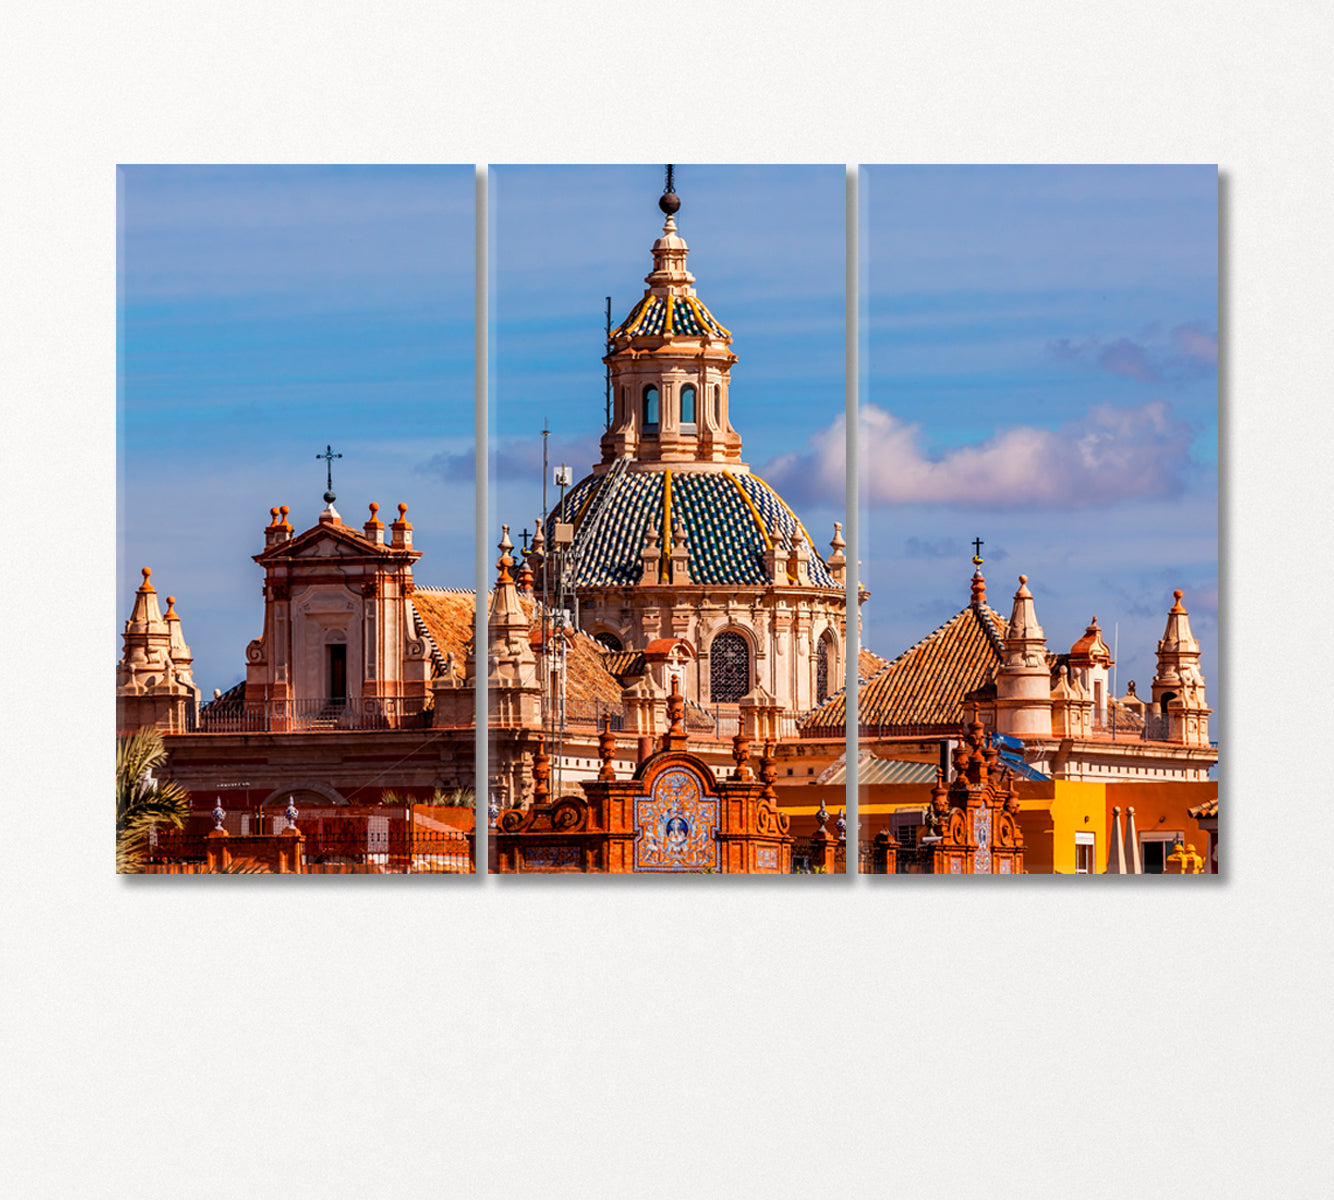 Dome of Church Salvador Seville Spain Canvas Print-Canvas Print-CetArt-3 Panels-36x24 inches-CetArt